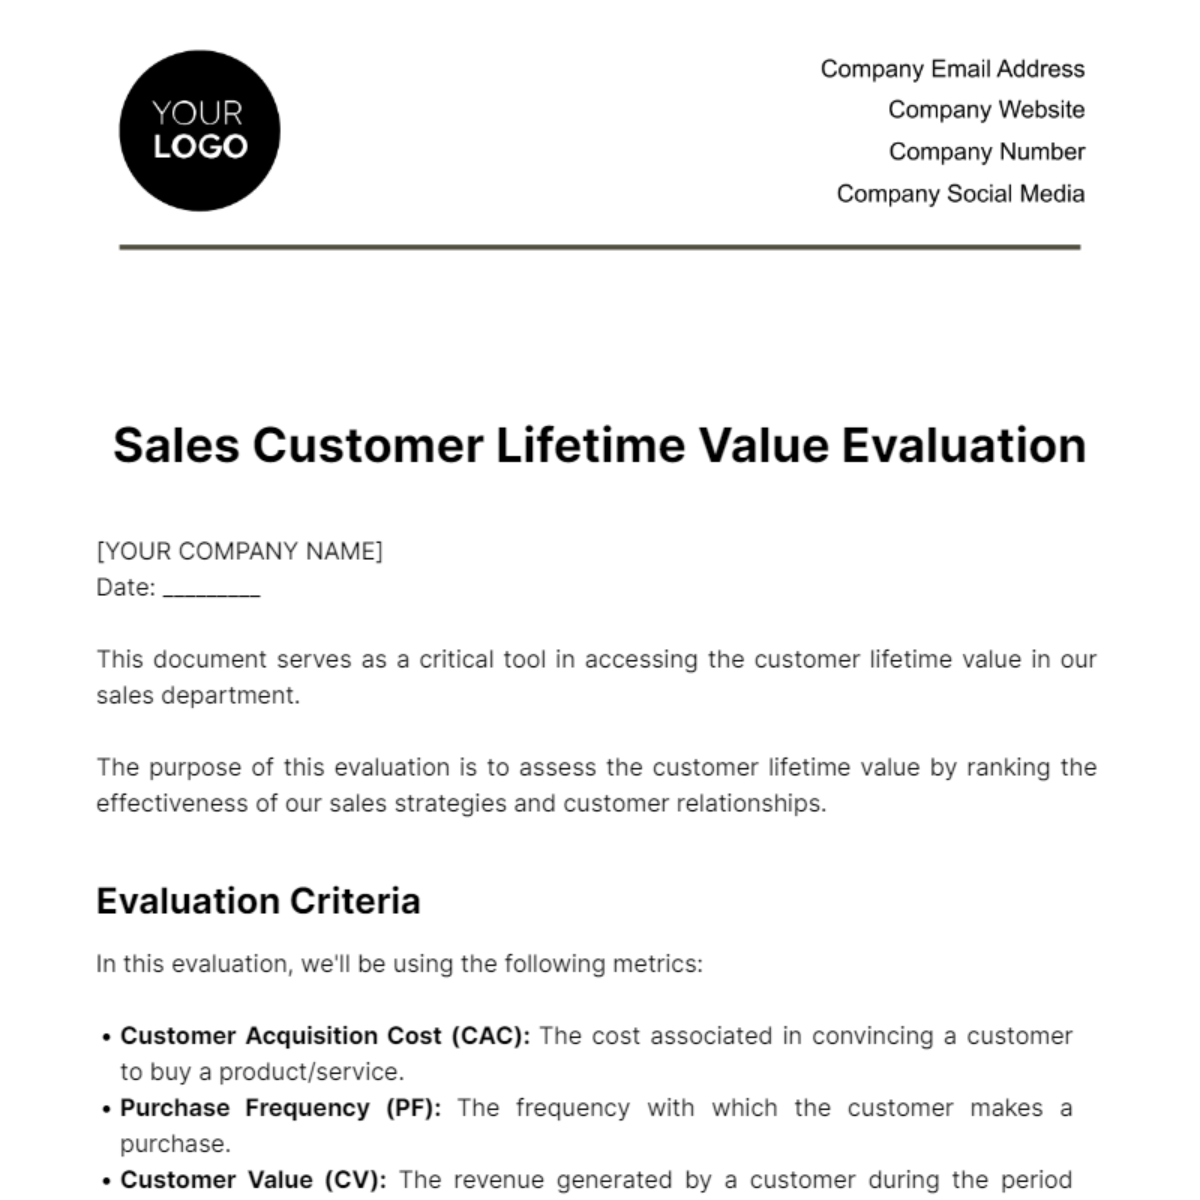 Sales Customer Lifetime Value Evaluation Template